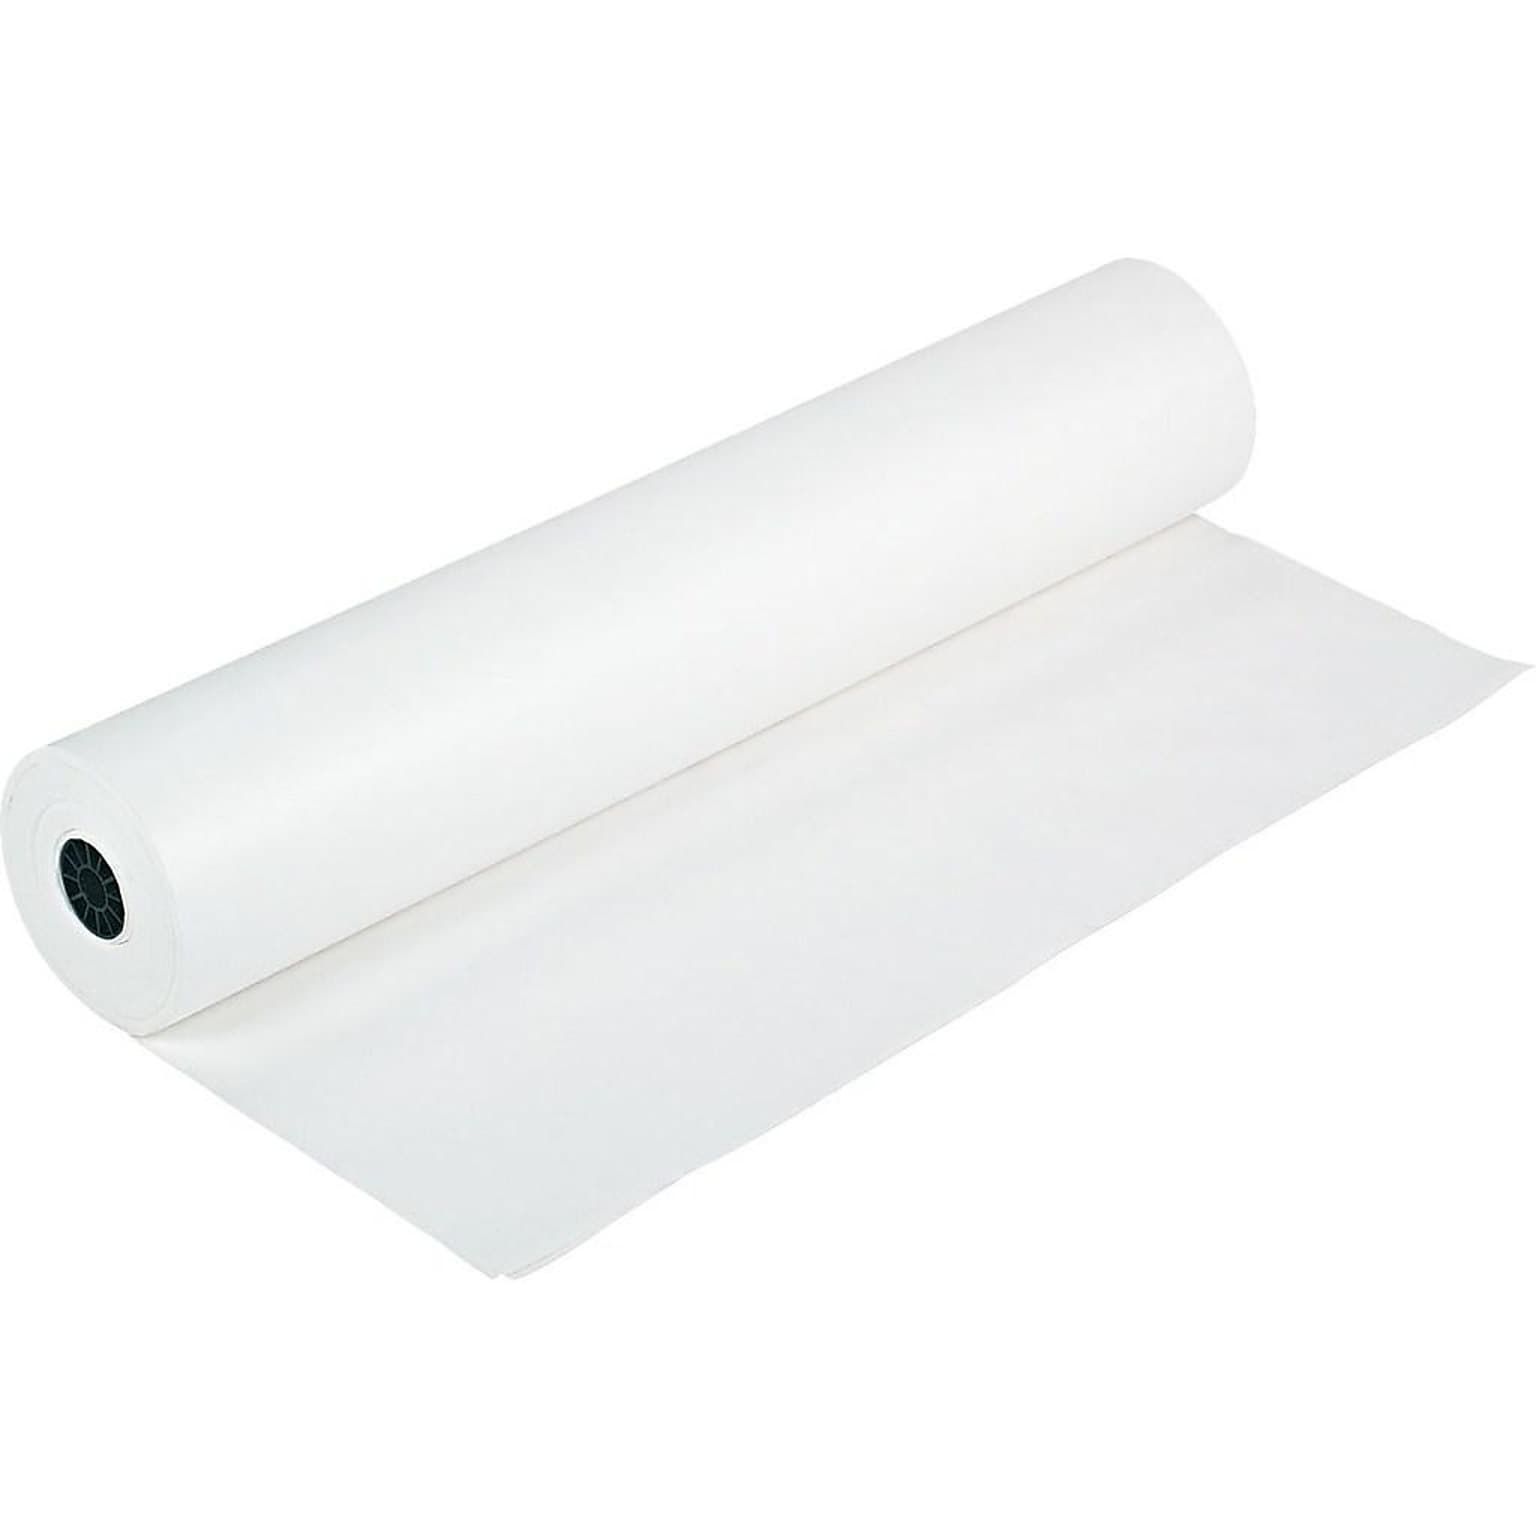 Rainbow Duo-Finish Paper Roll, 36W x 1000L, White (0063000)